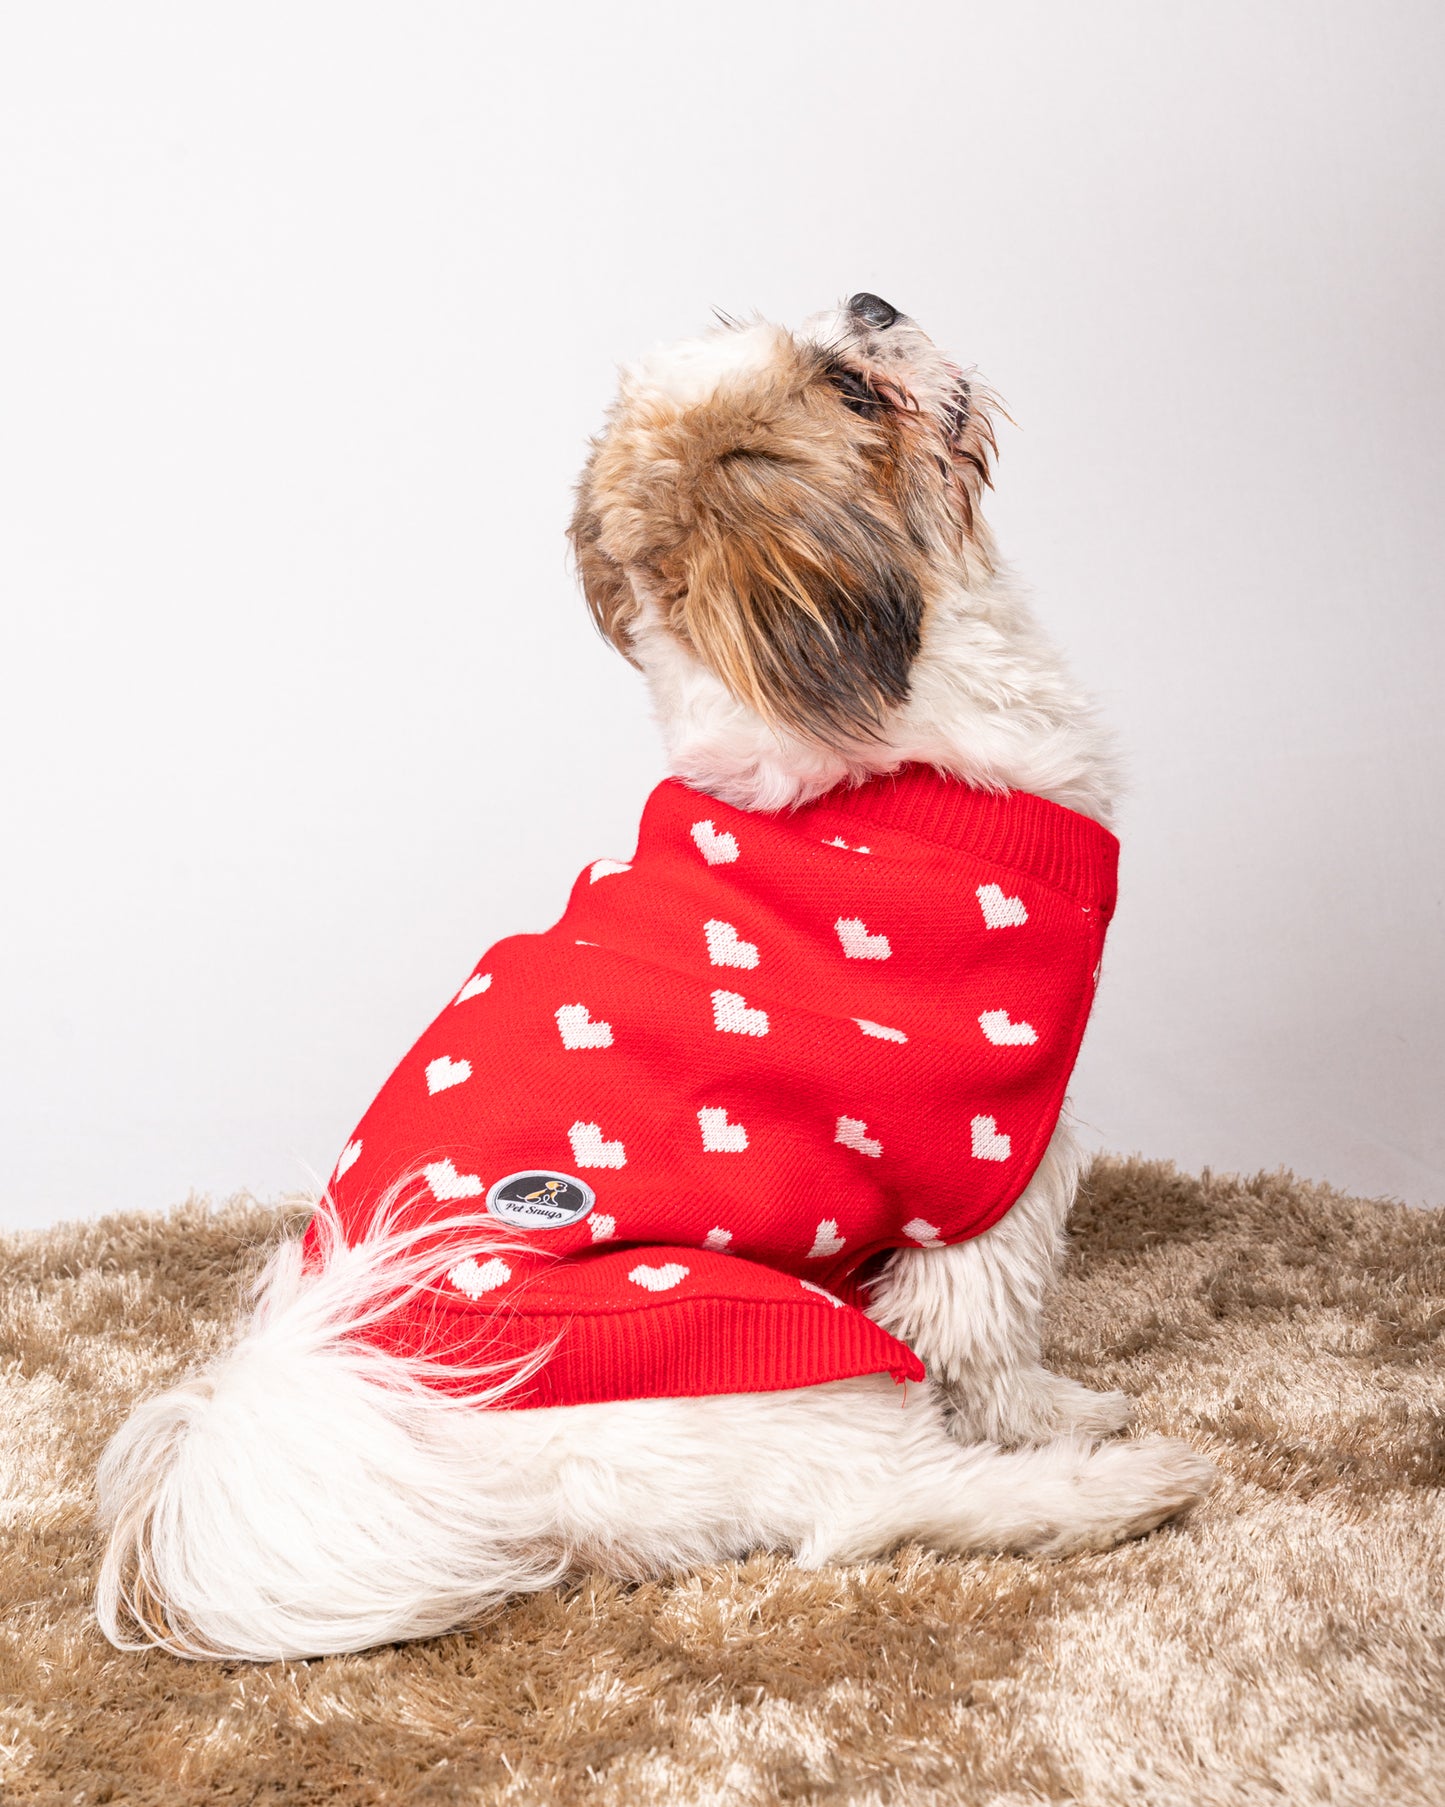 Petsnugs Red Heart Sweater - Red & White